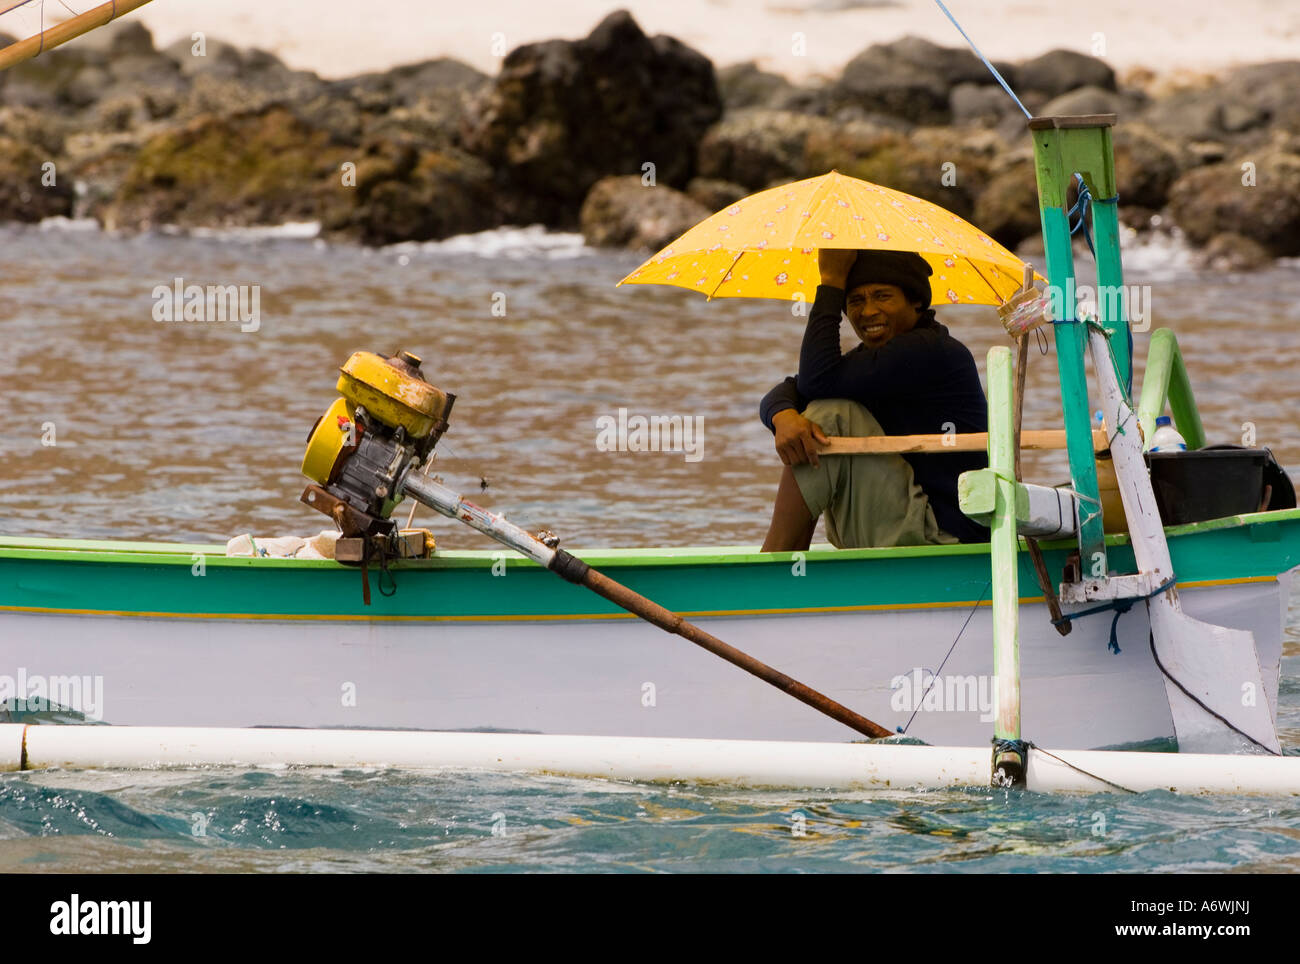 https://c8.alamy.com/comp/A6WJNJ/fisherman-holding-umbrella-on-boat-A6WJNJ.jpg